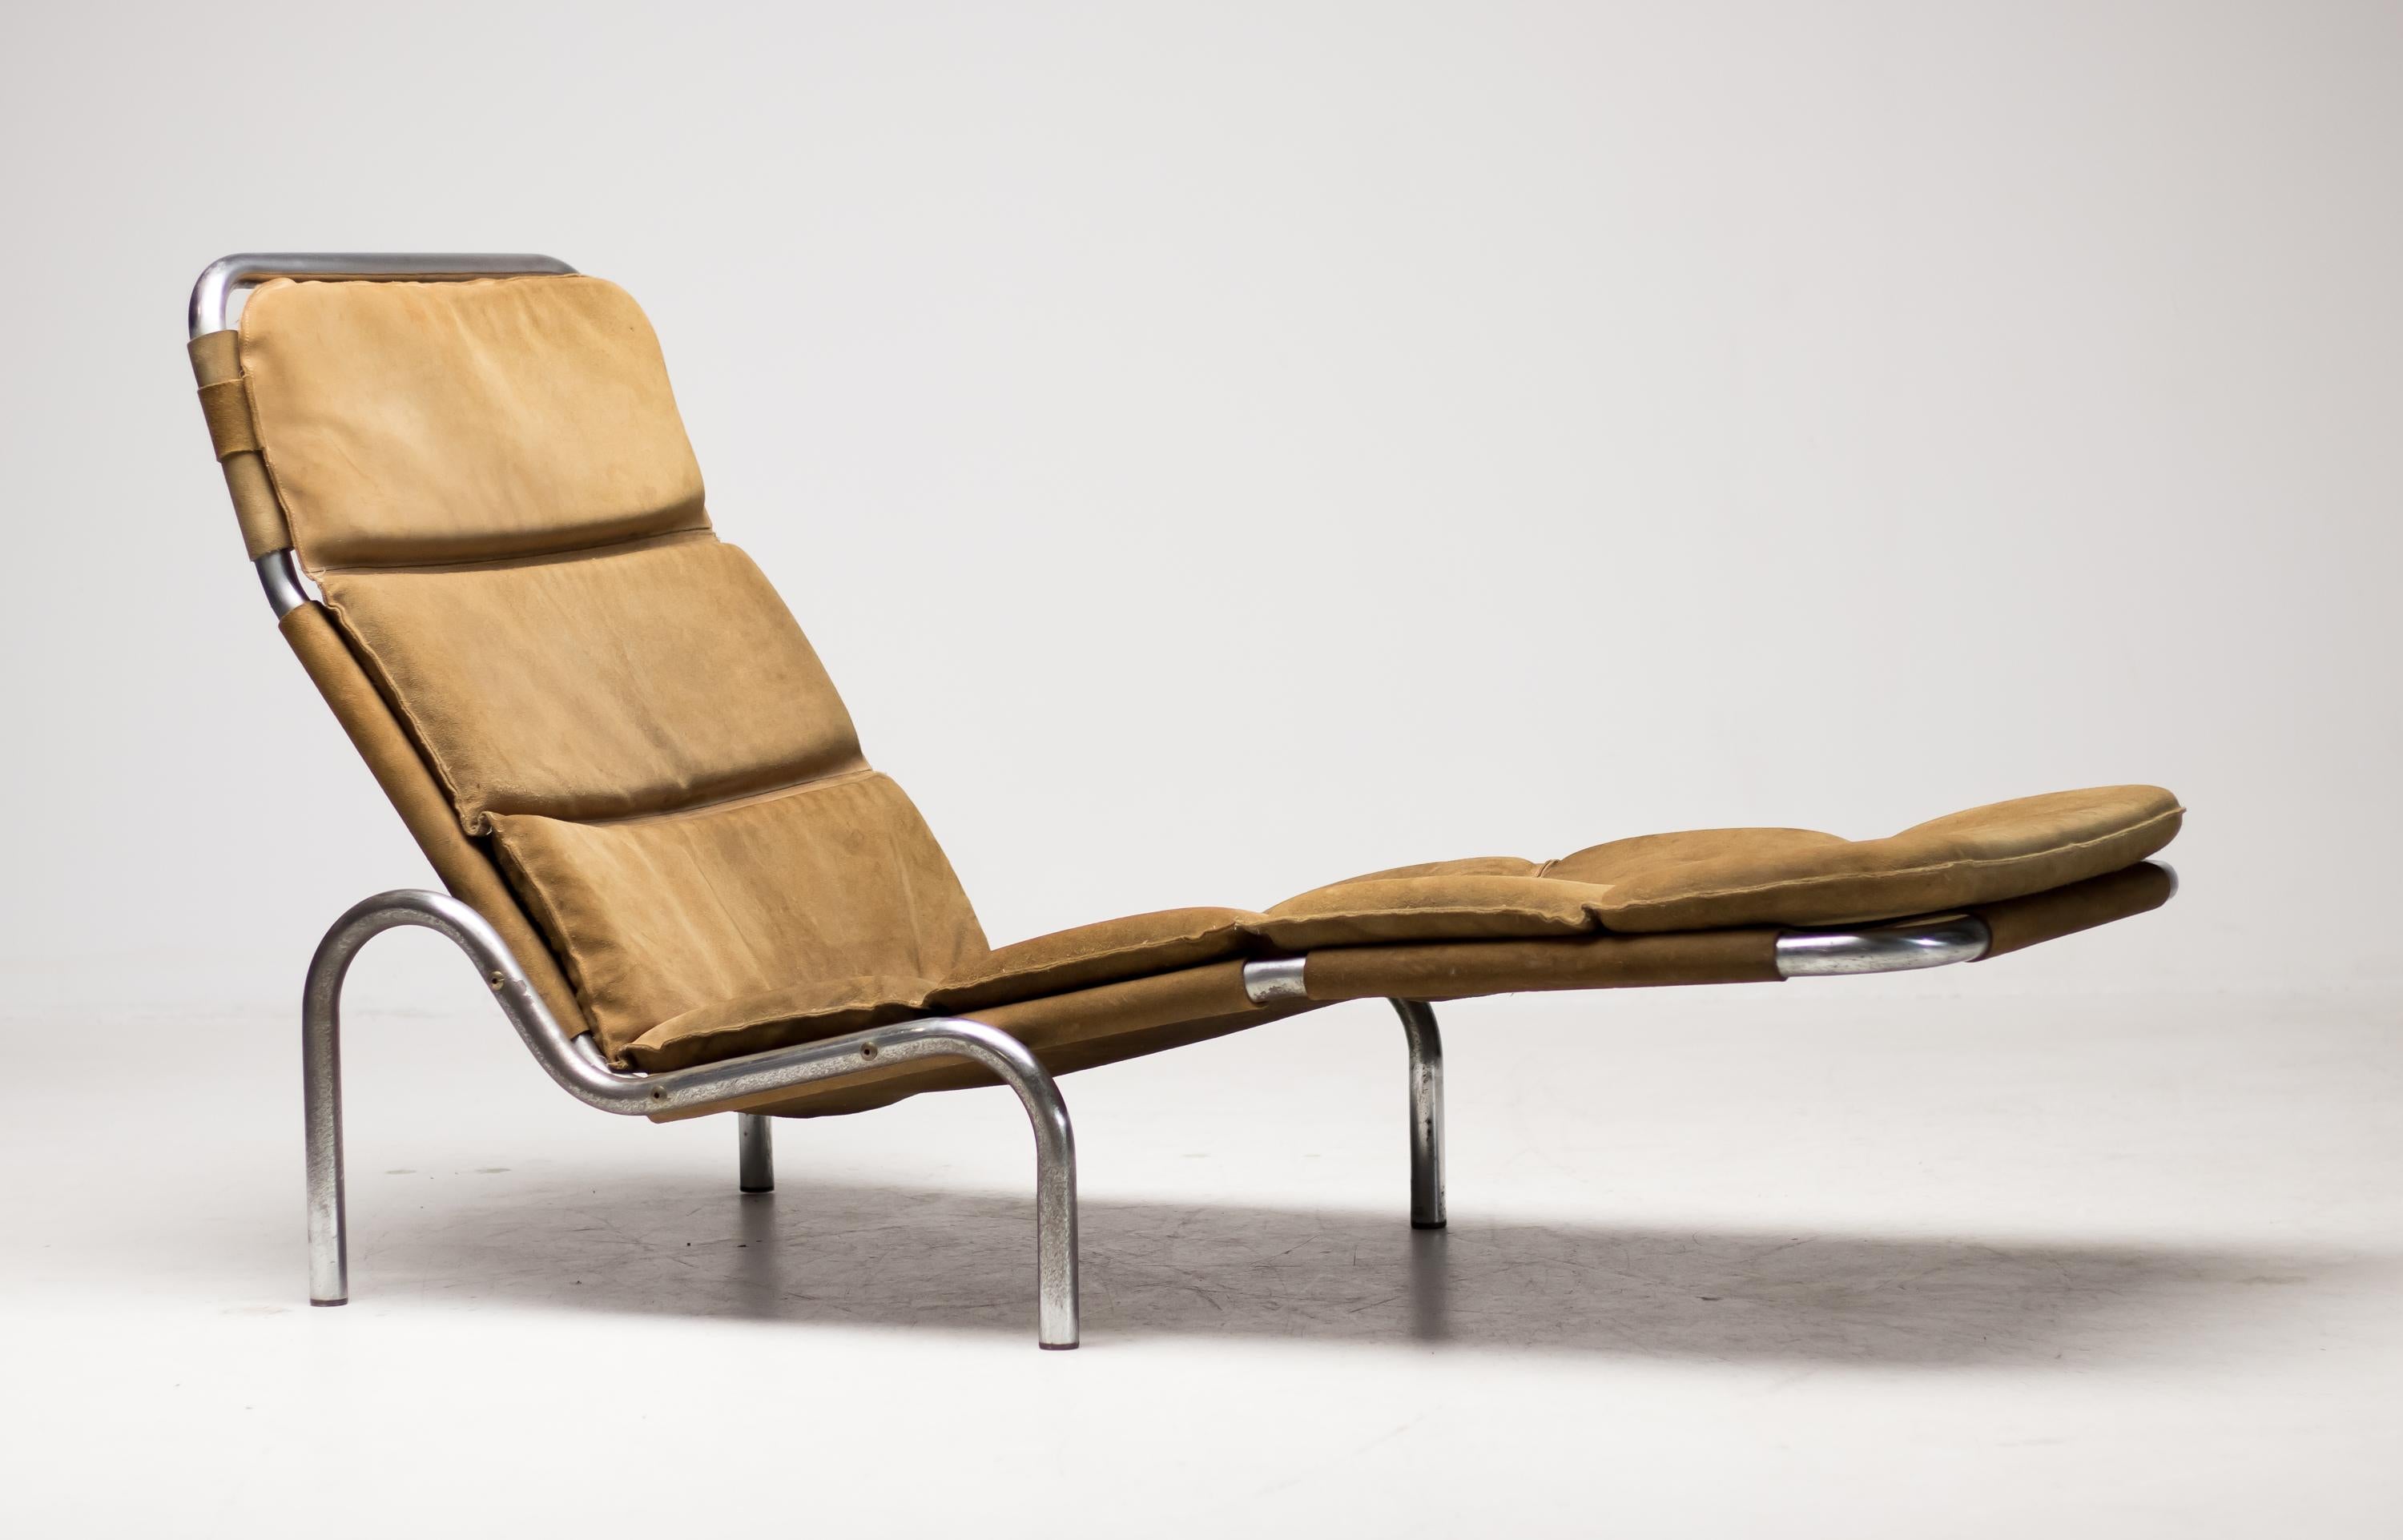 Rare chaise lounge designed by Erik Ole Jørgensen for Georg Jørgensen & Søn, Denmark, 1960.
All original suede upholstery in nice vintage condition.